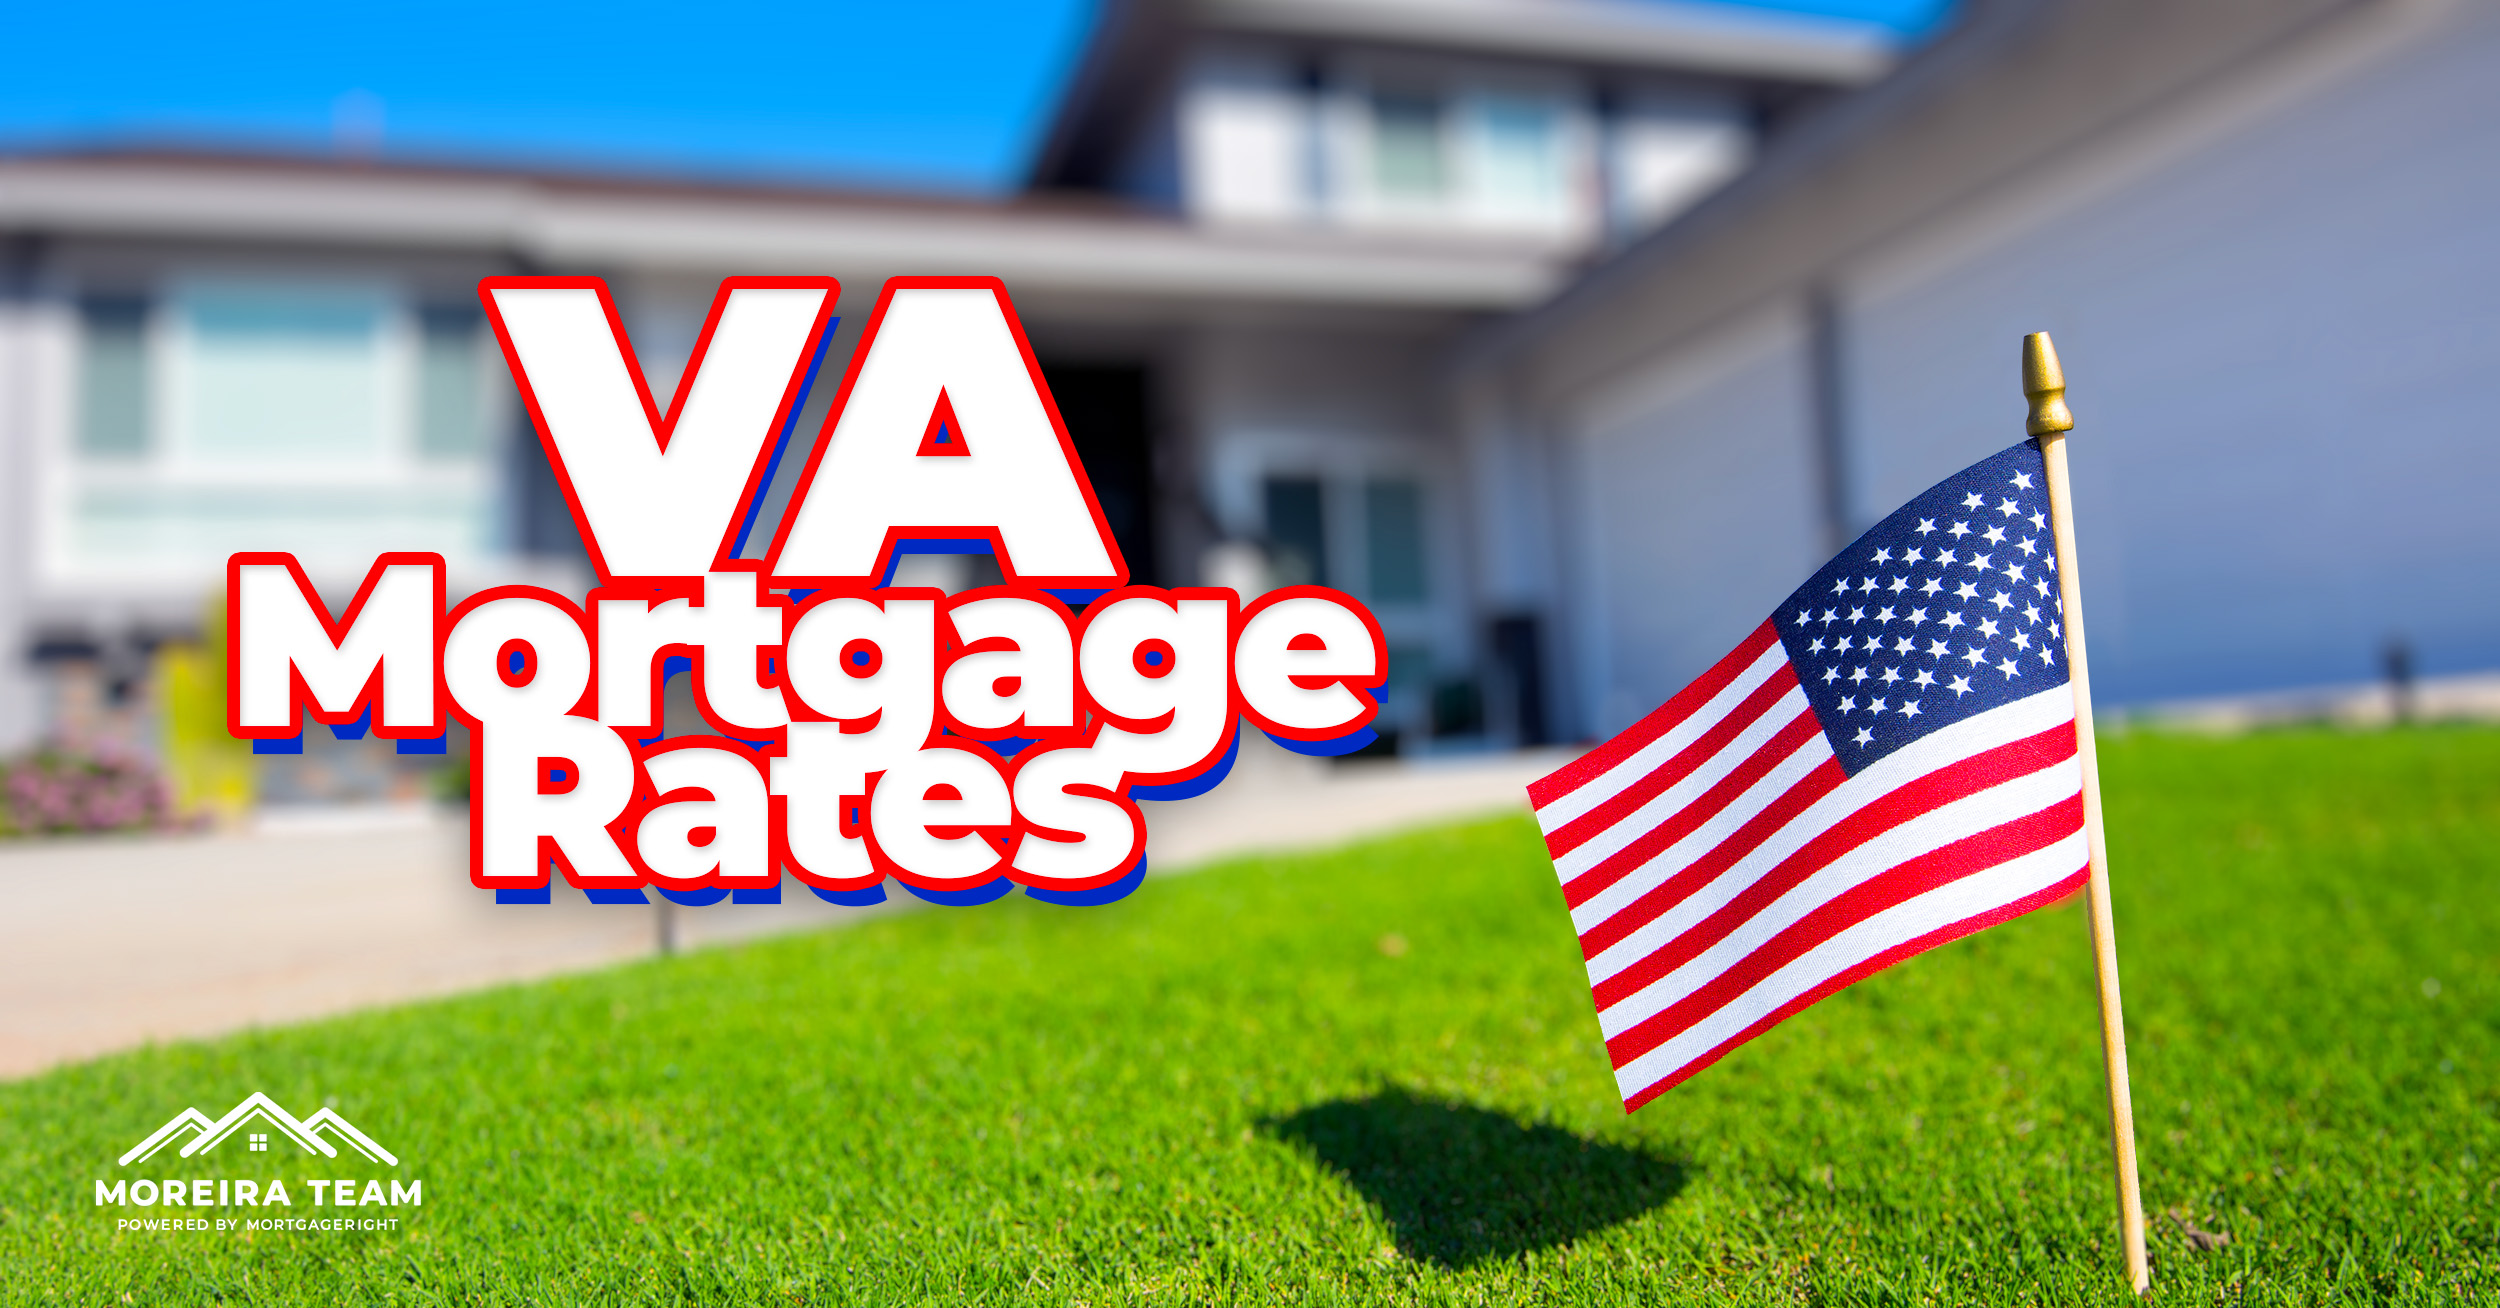 VA Mortgage Rates in Atlanta, GA